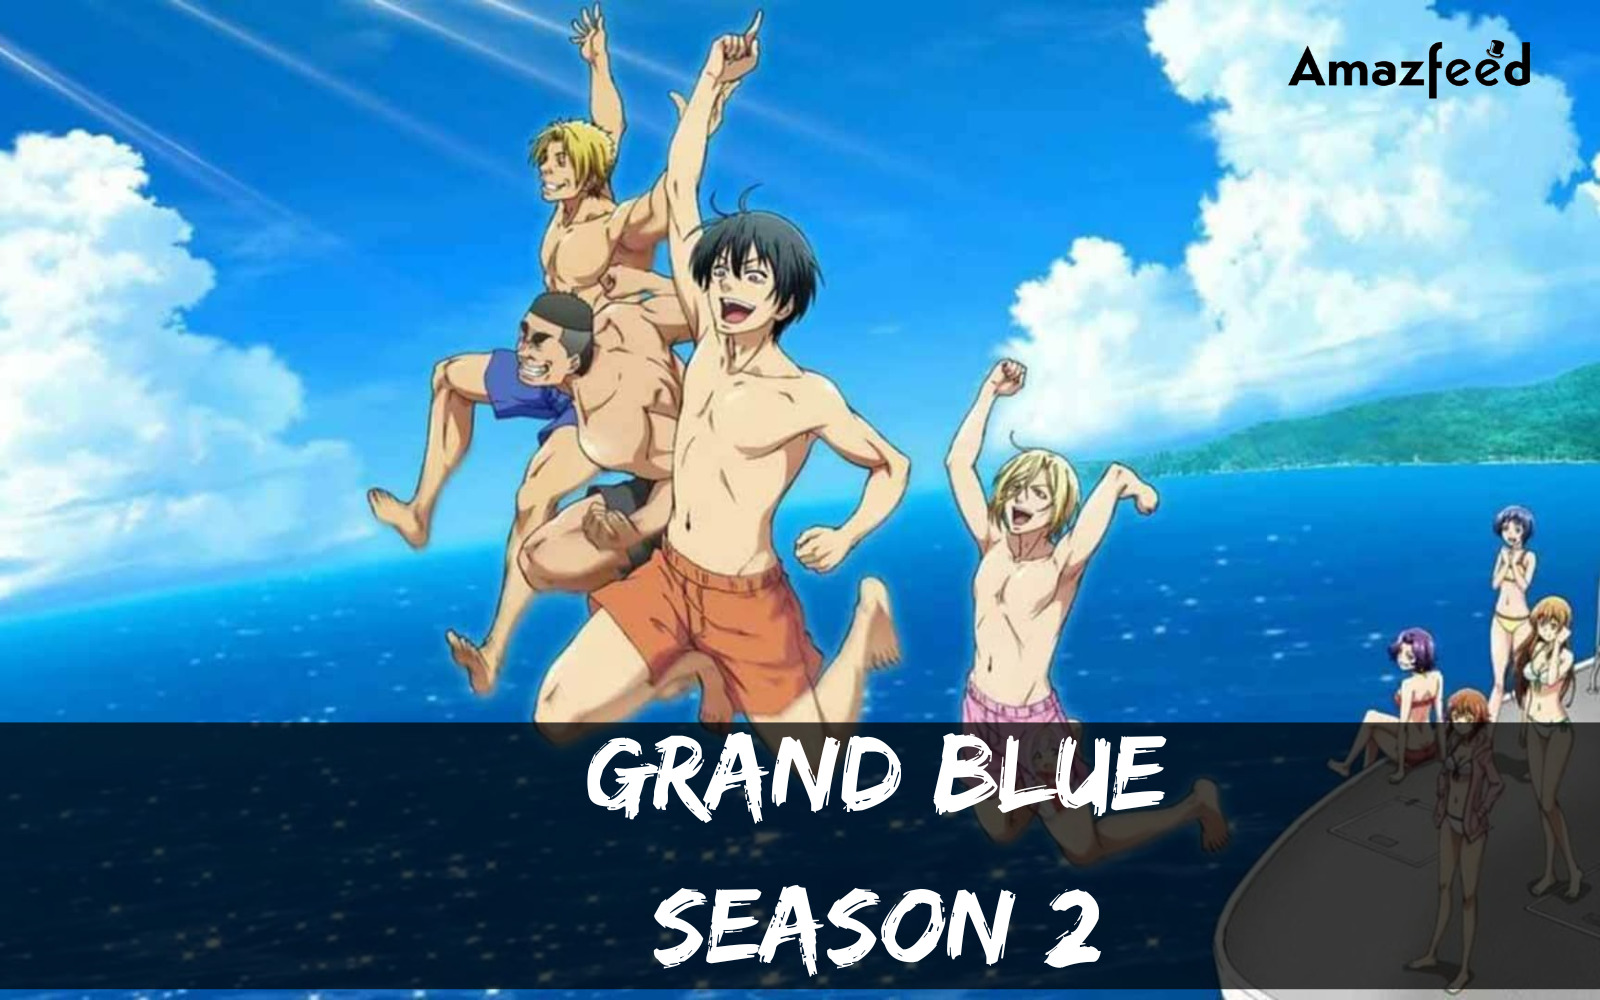 Grand Blue Season 2: Everything We Know So Far